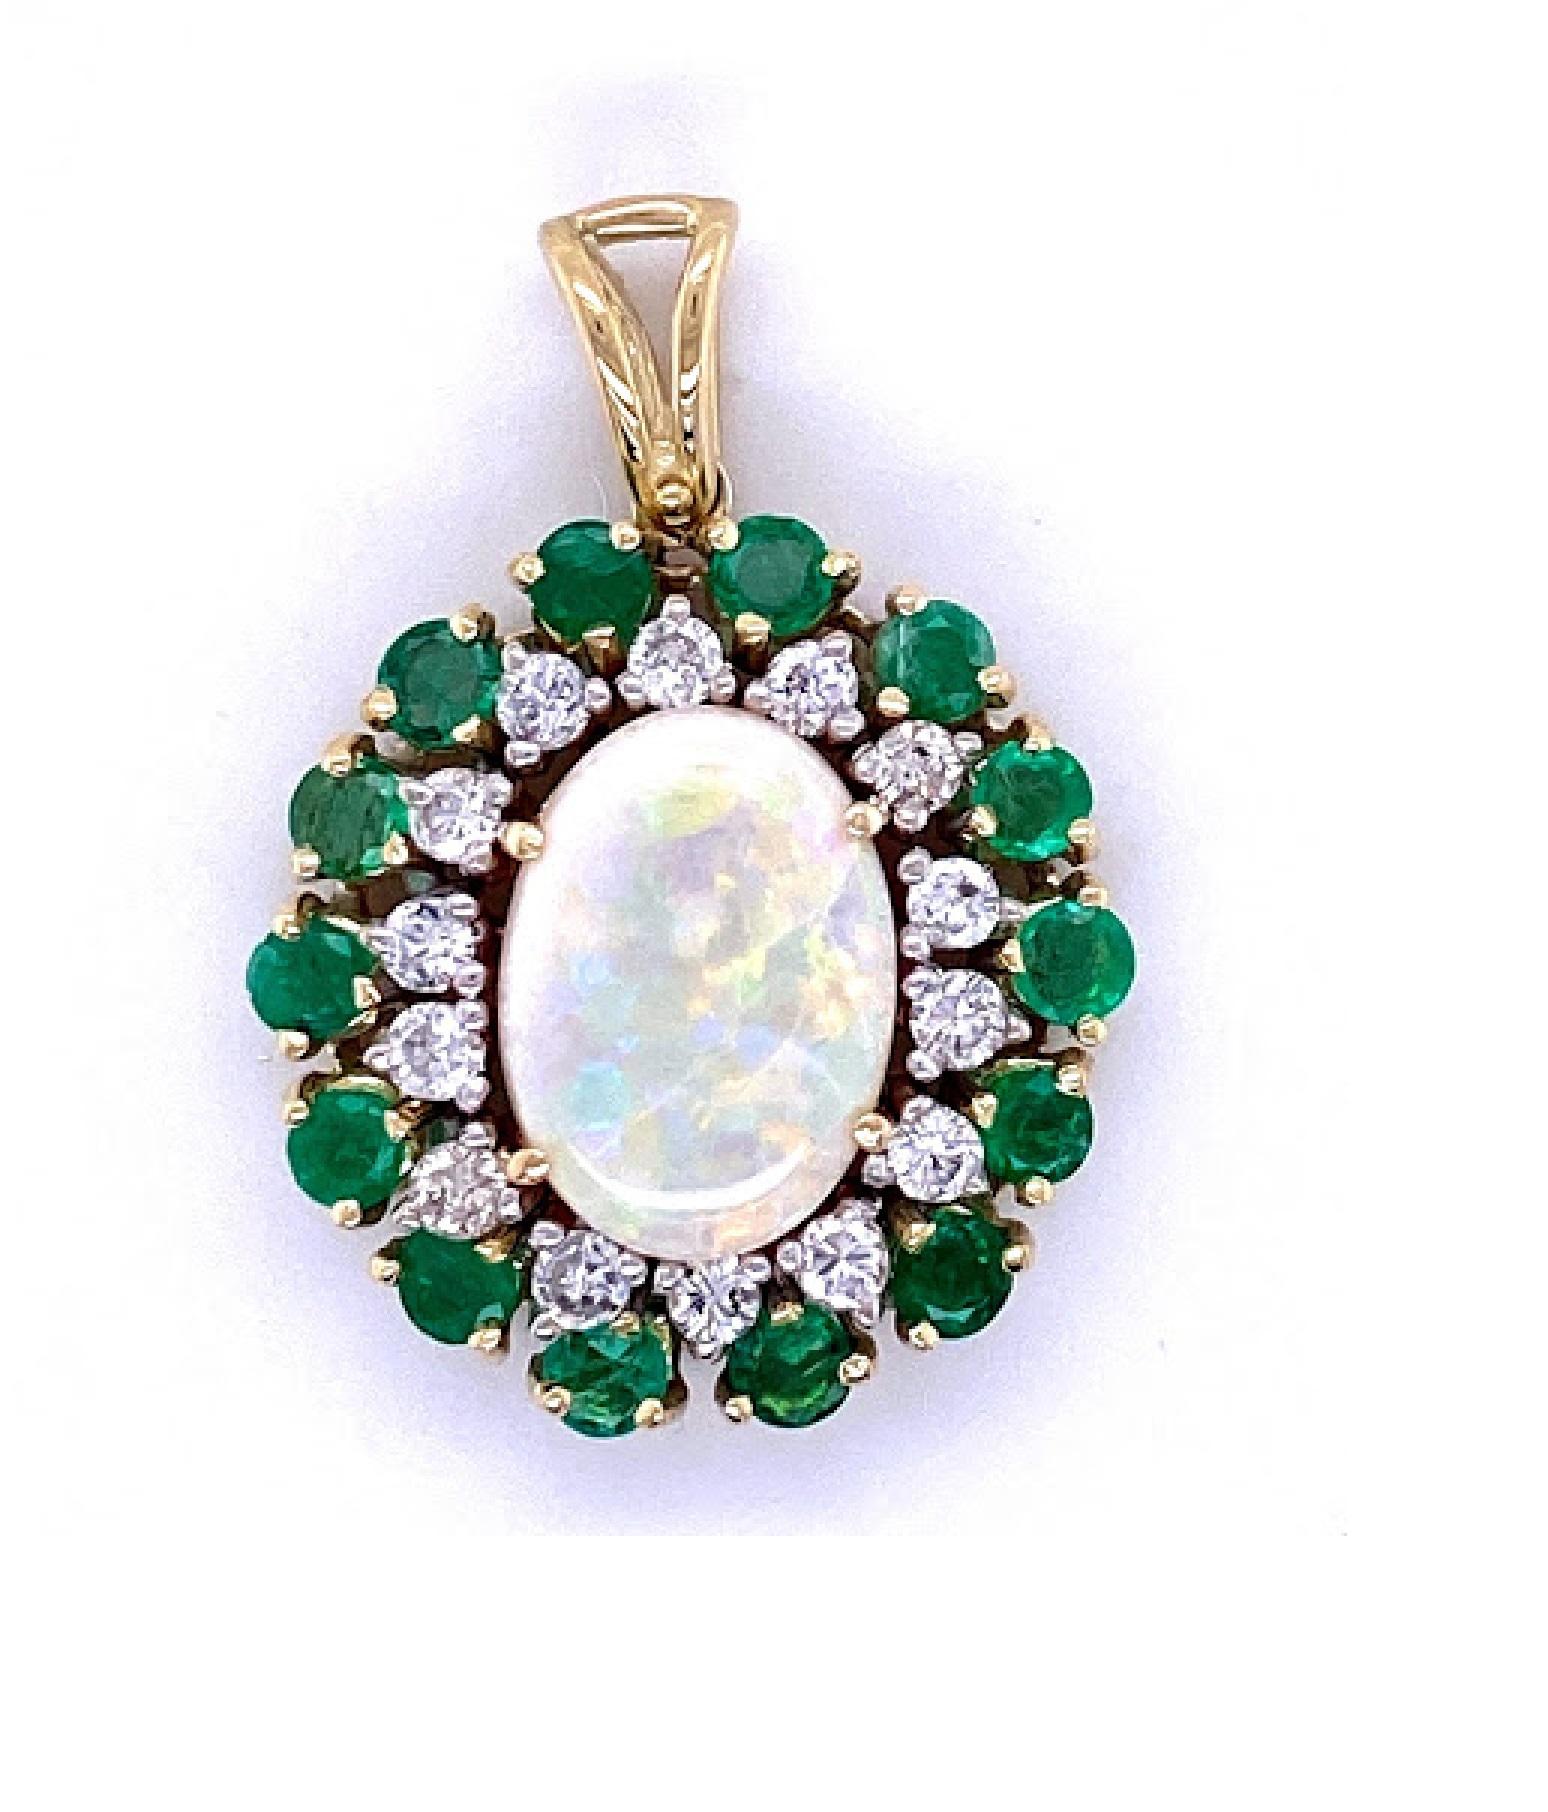 Oval Cut Opal, Emerald, and Diamond Pendant